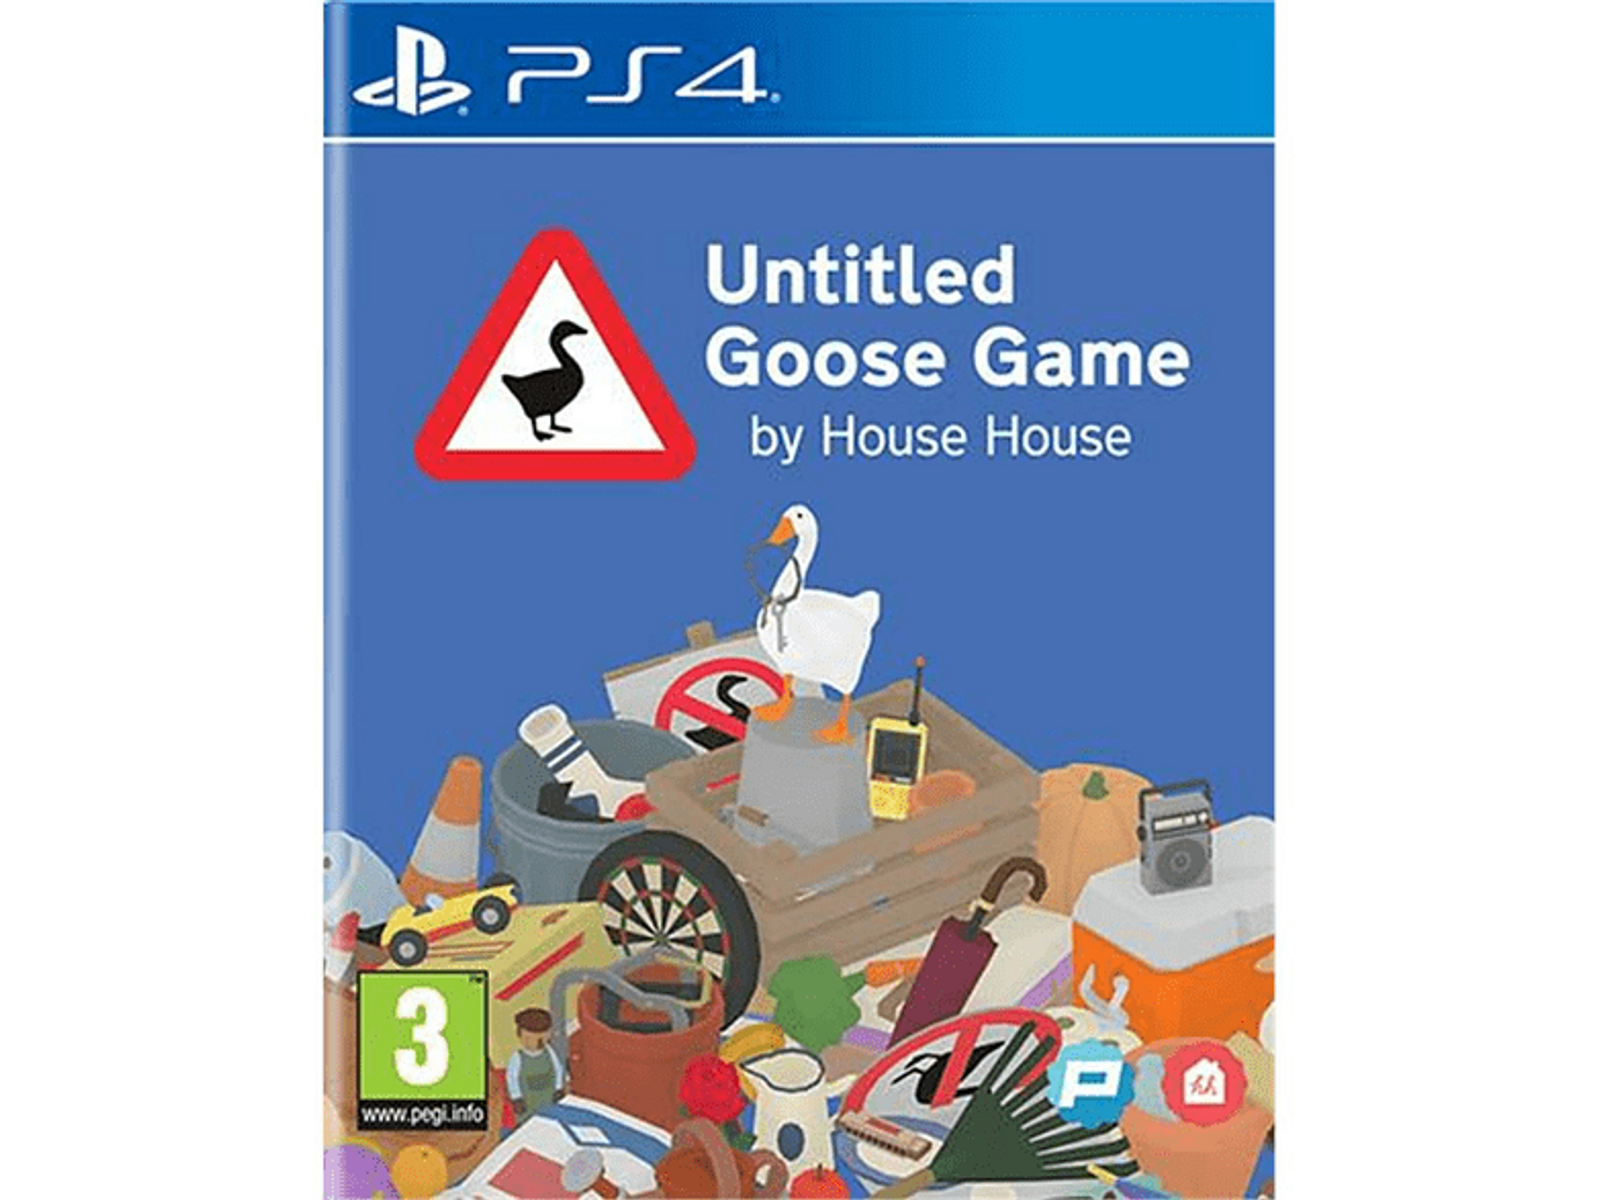 UK Game [PlayStation 4] - Goose PS-4 Untitled